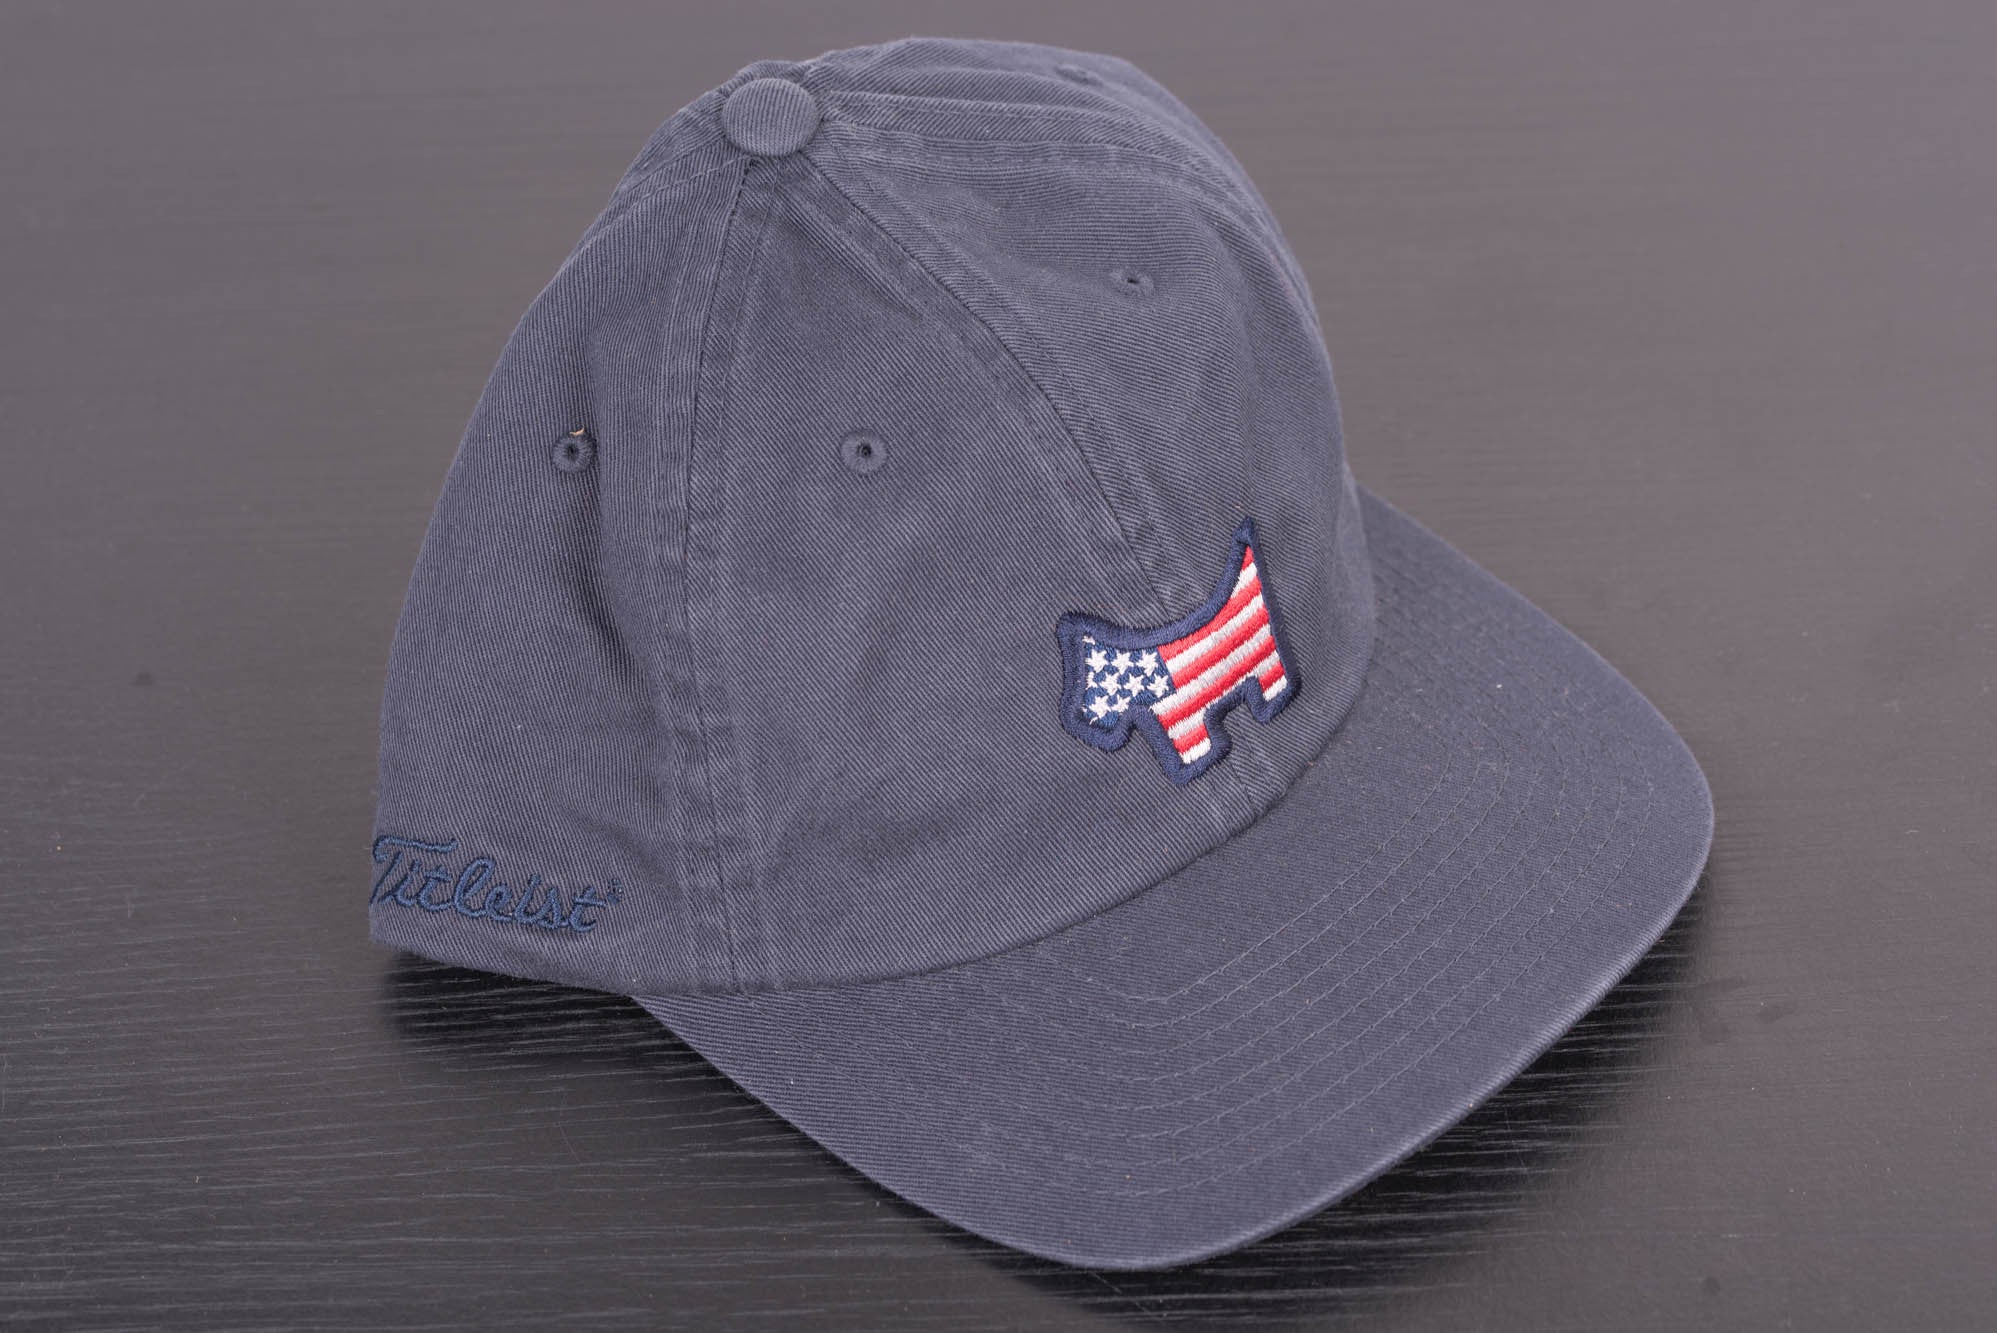 2017 US Open Americana Classic navy hat